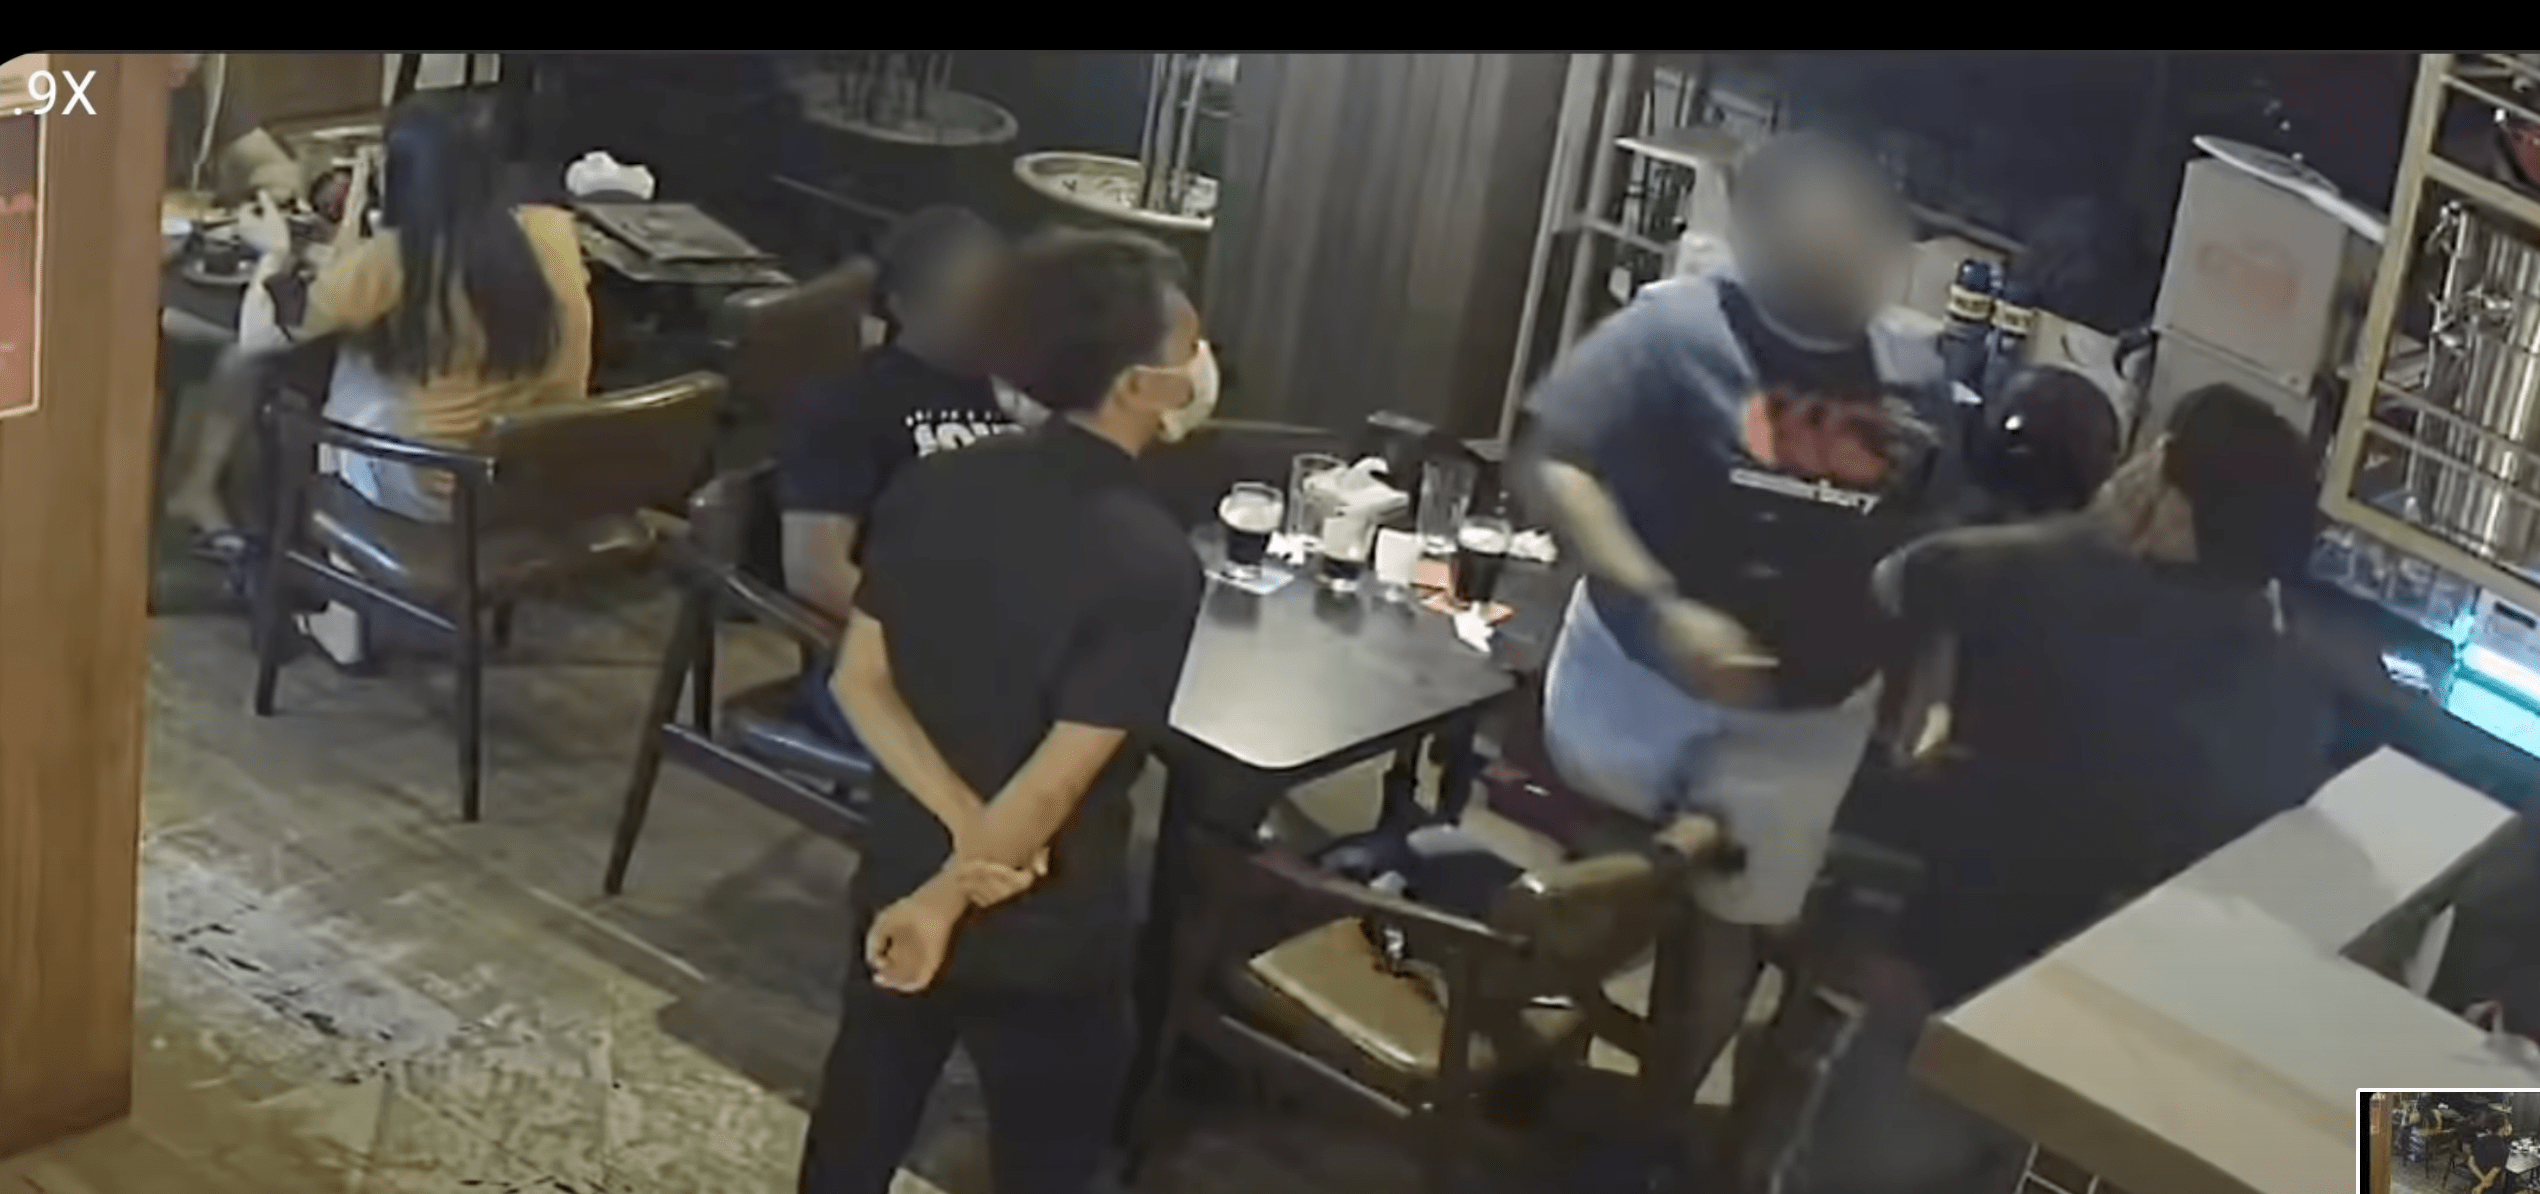 Customer slaps waiter for refusing to play tamil songs at a restaurant in subang jaya 01